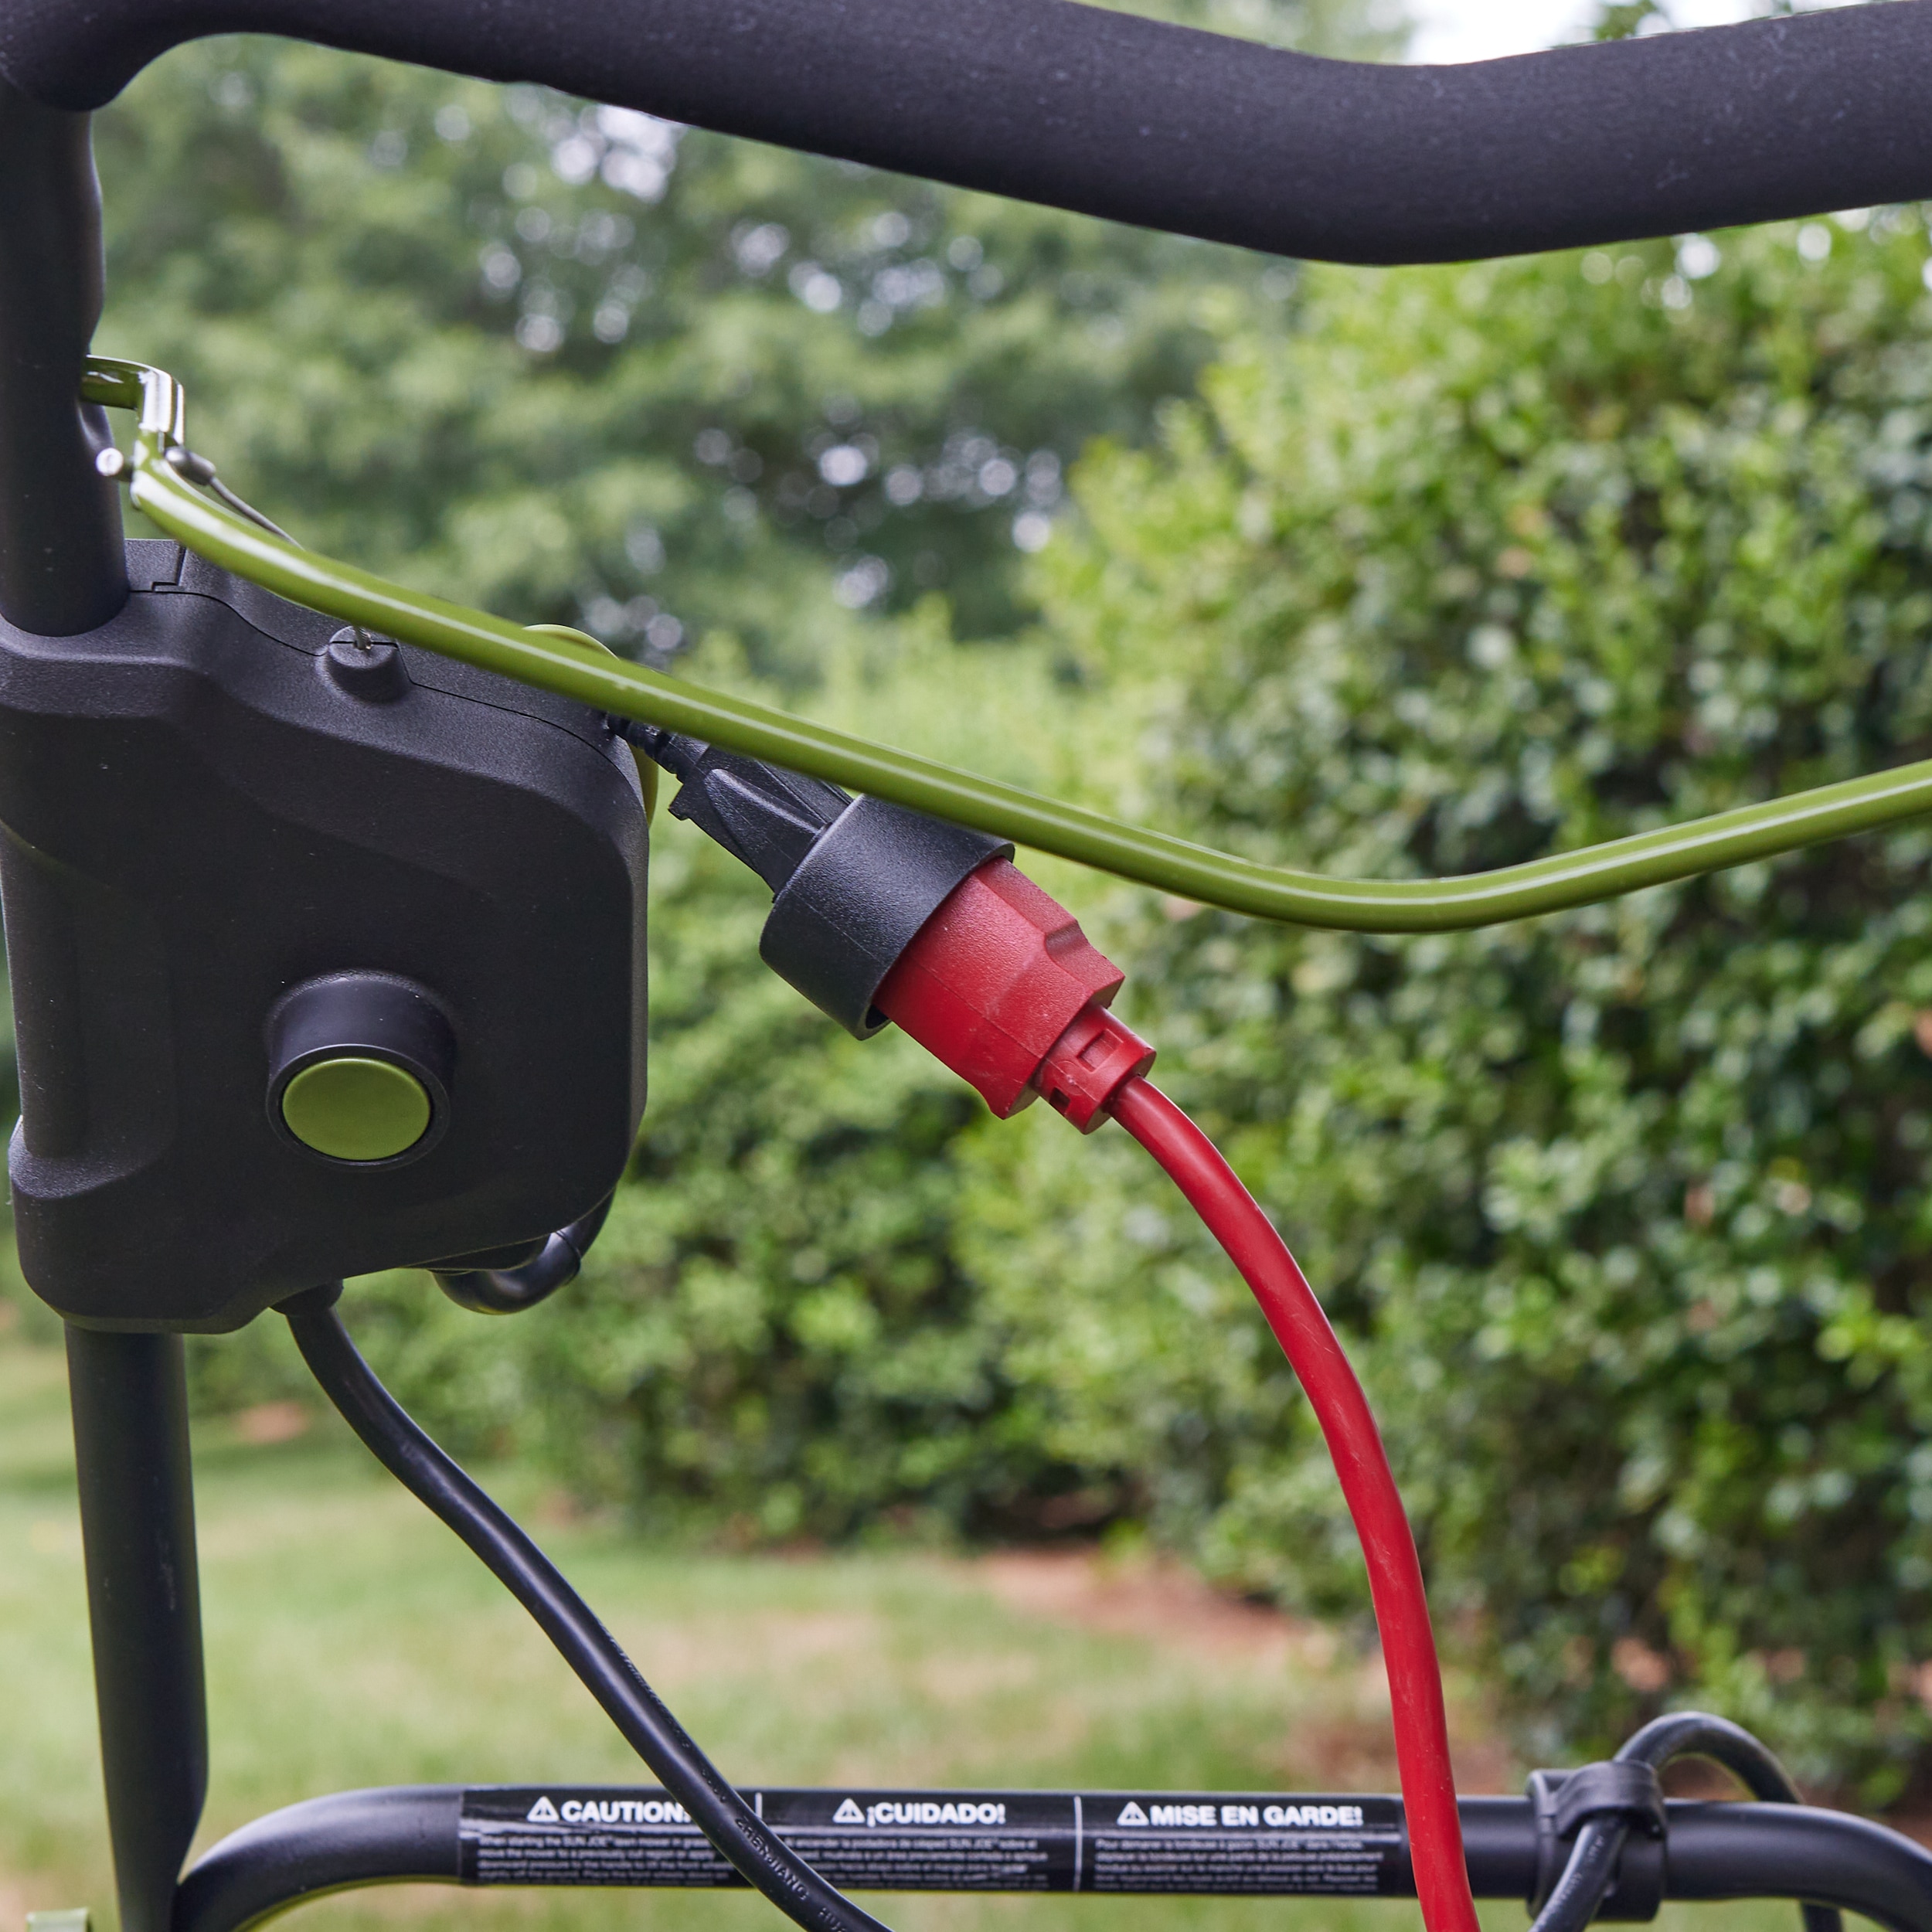 Sun Joe 12-Amp 20-in Corded Lawn Mower in the Corded Electric Push